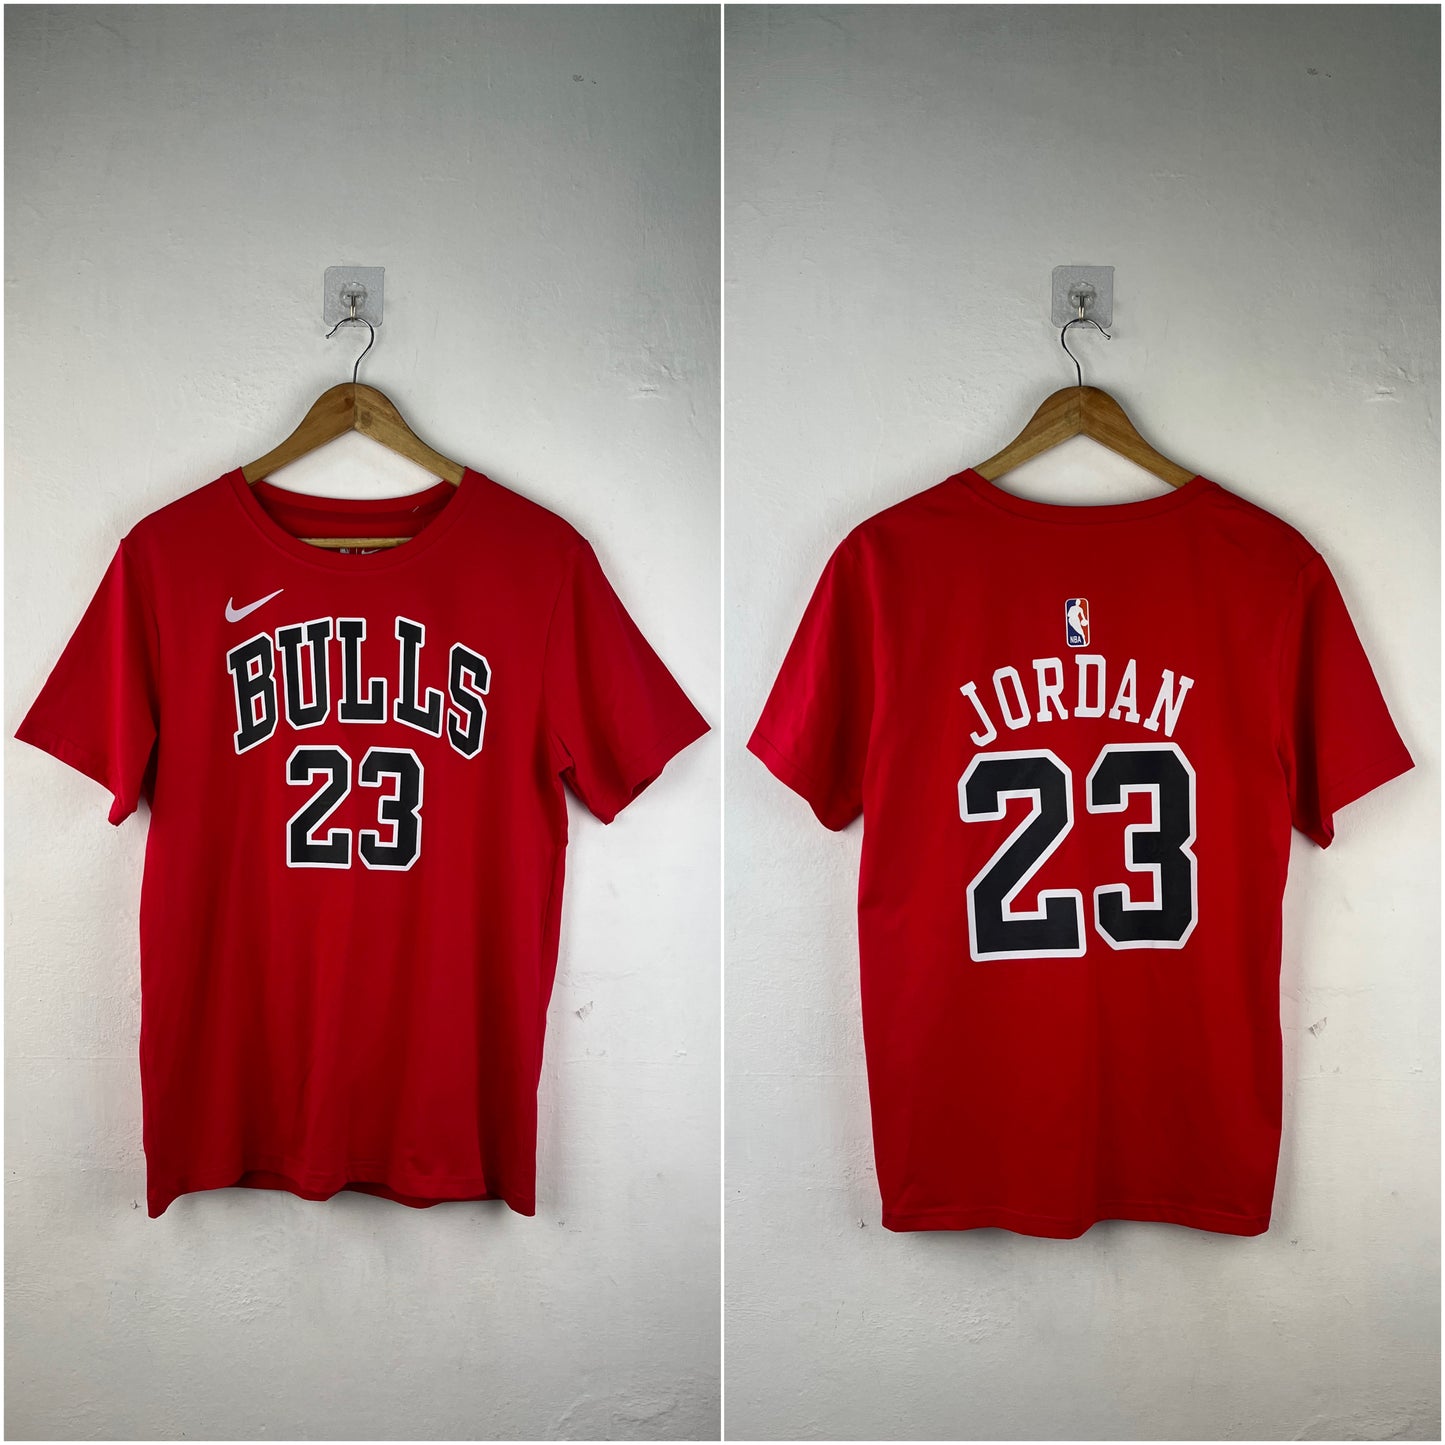 Jordan 23 Bulls Red T-Shirt